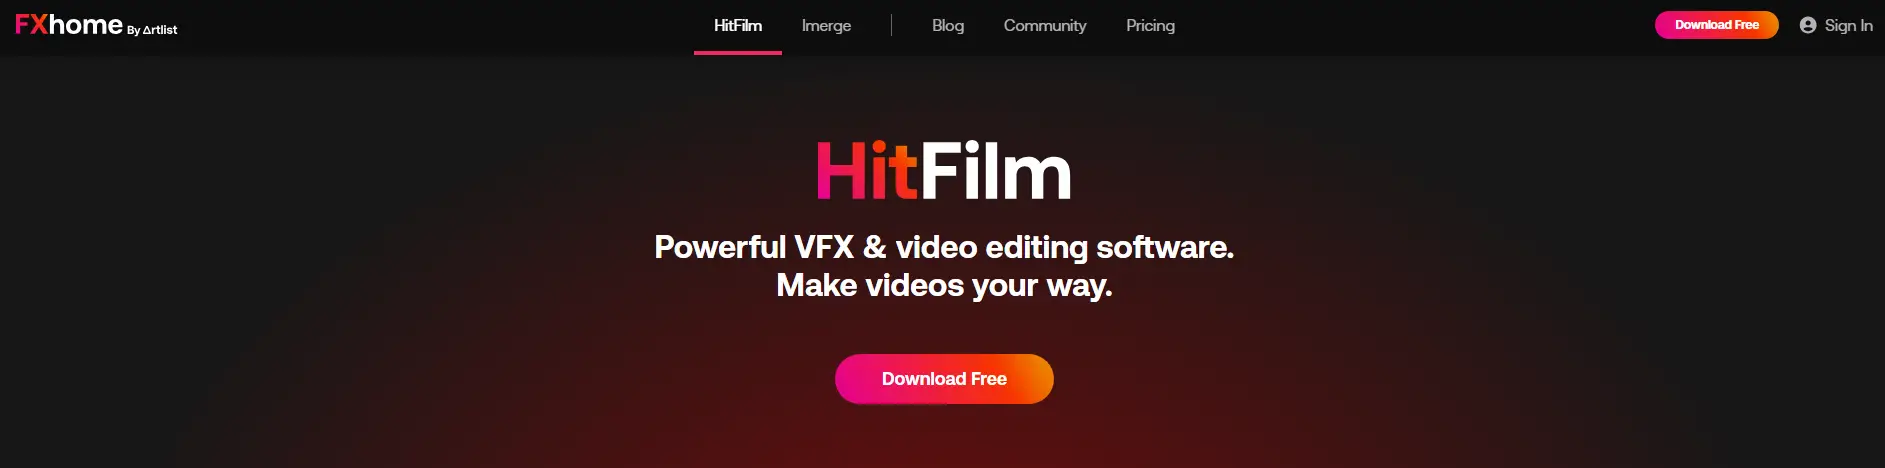 HitFilm Express Tu estudio de edición gratuito